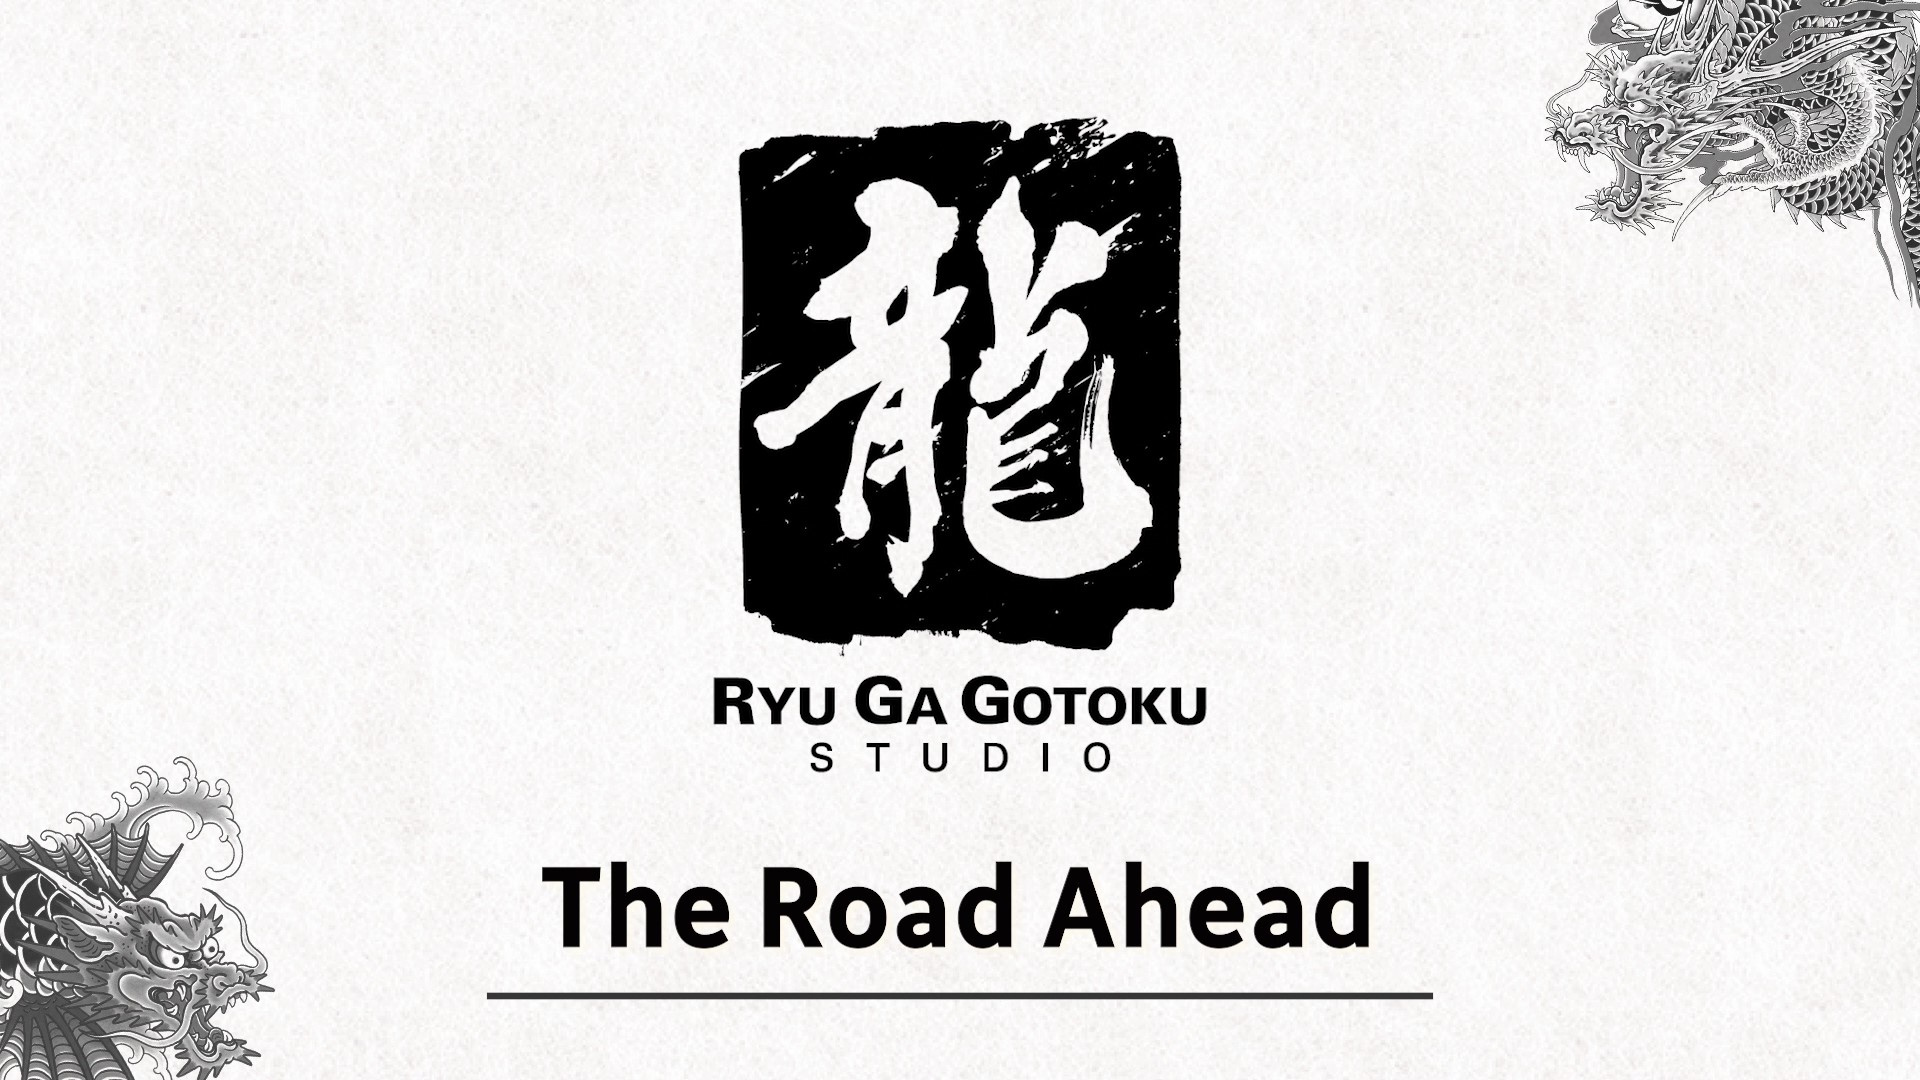 Ryu Ga Gotoku Studio documentary "A Path of Struggles"